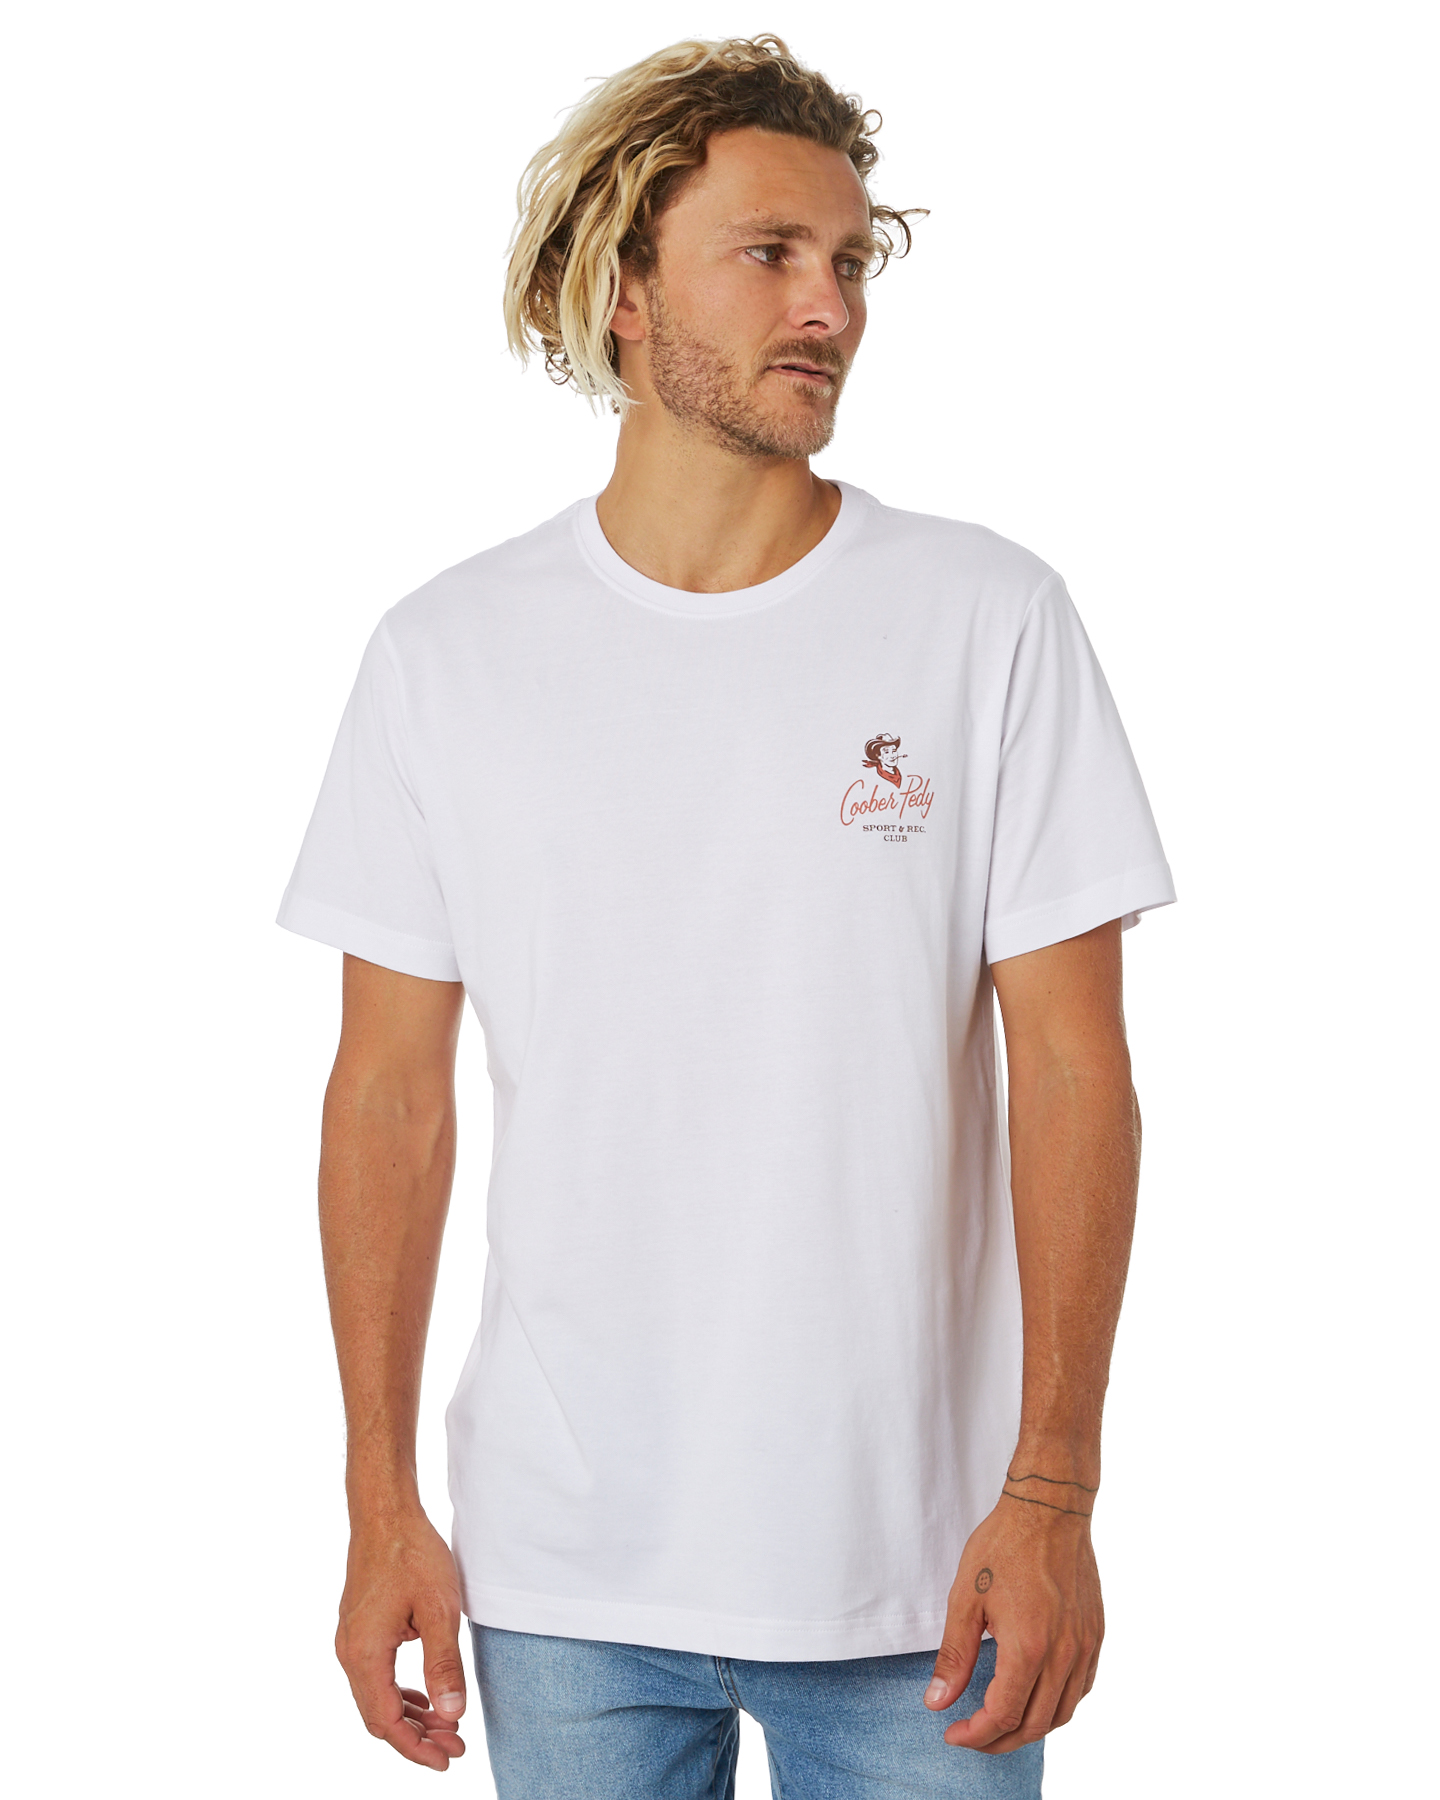 Mr Simple Tourist Coober Pedy Mens Tee - White | SurfStitch